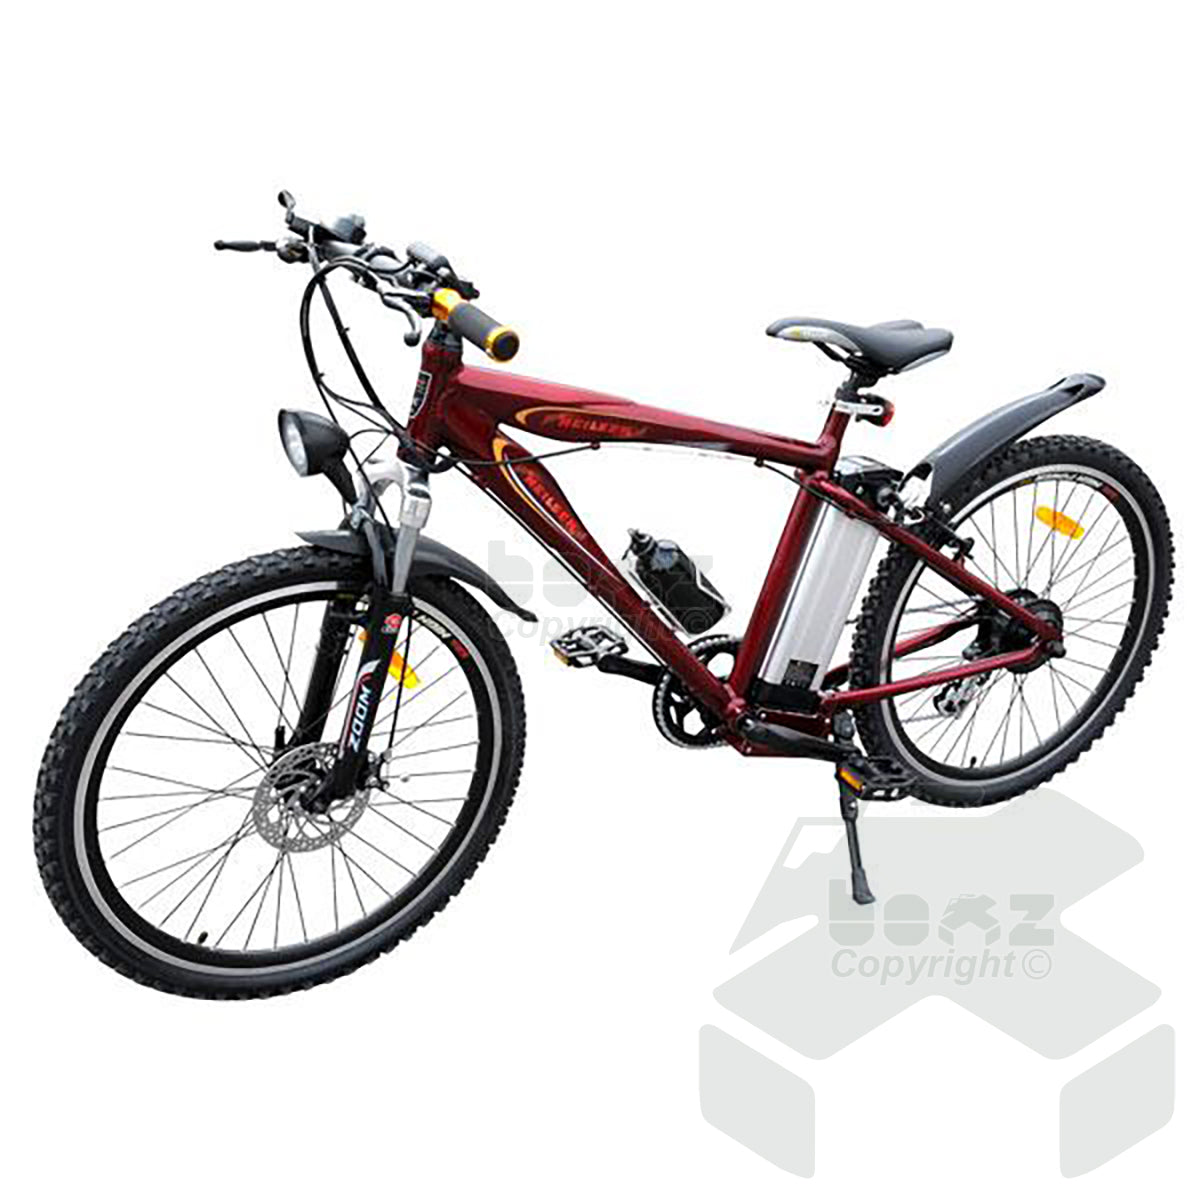 Neilsen Hp-e008 Electric Bike Red